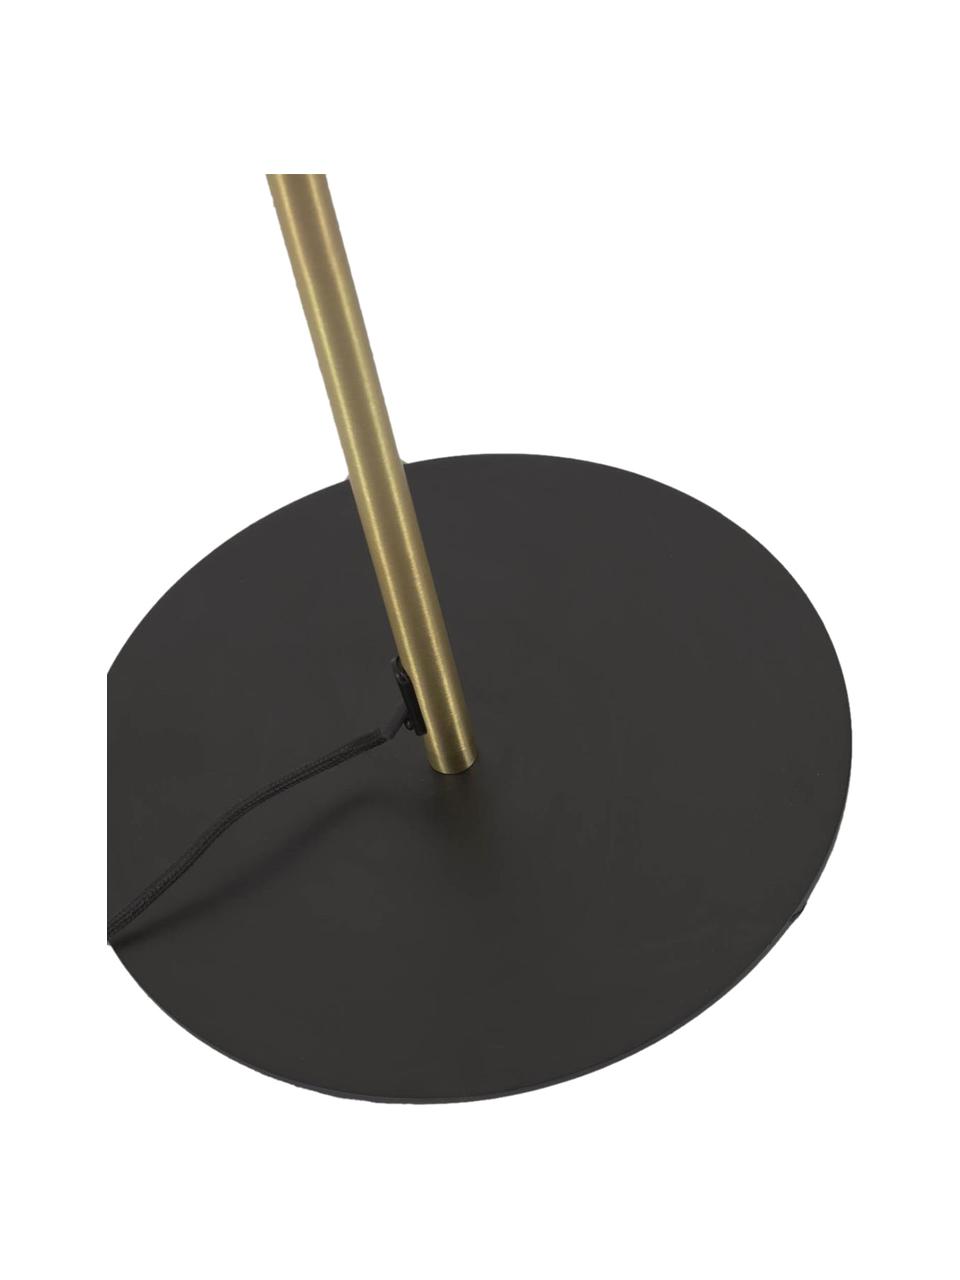 Uplighter Eglantina in zwart/goud, Lampenkap: gecoat metaal, Lampvoet: gecoat metaal, Zwart, goudkleurig, Ø 30 cm x H 155 cm